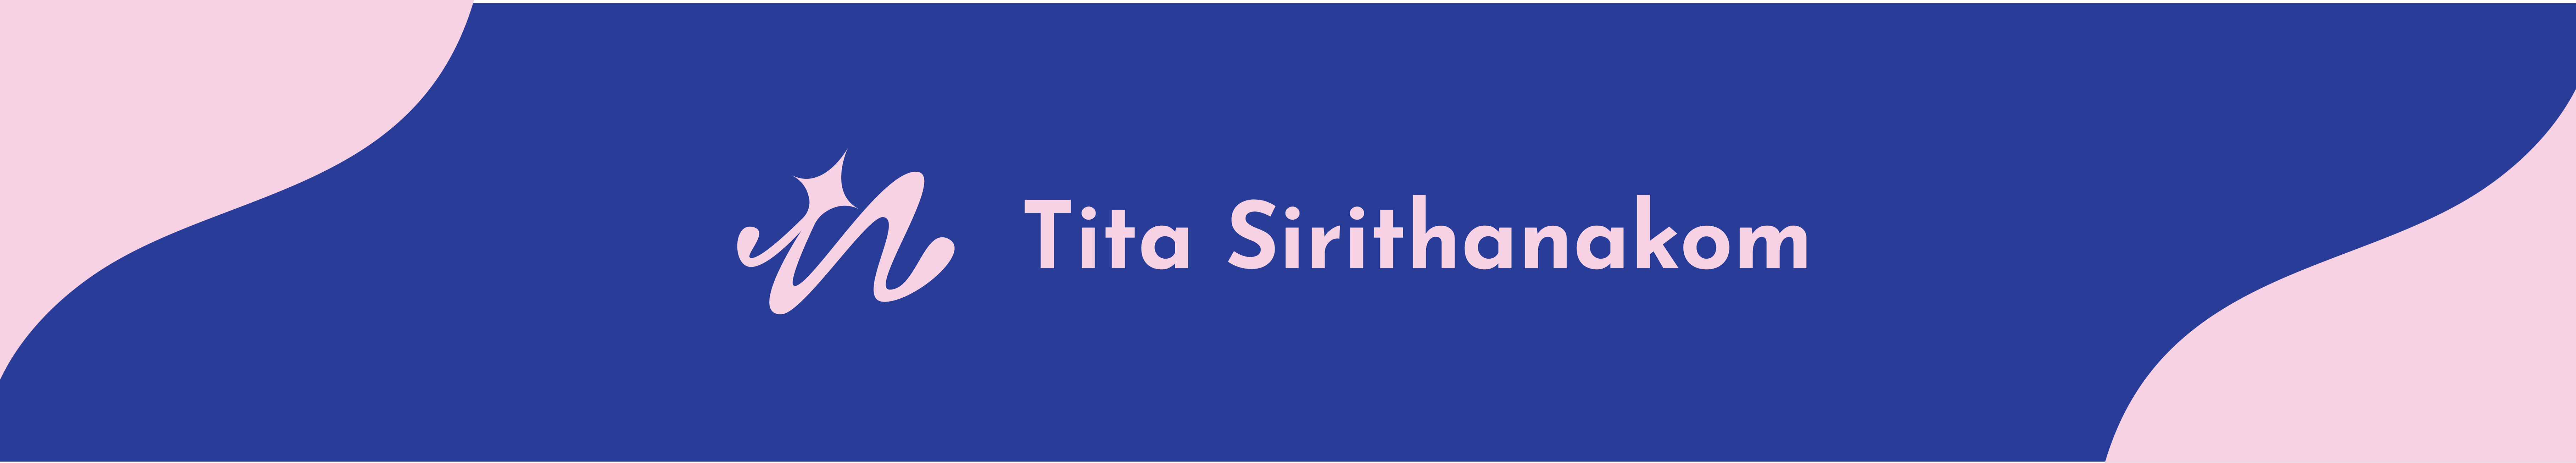 Tita Sirithankoms profilbanner